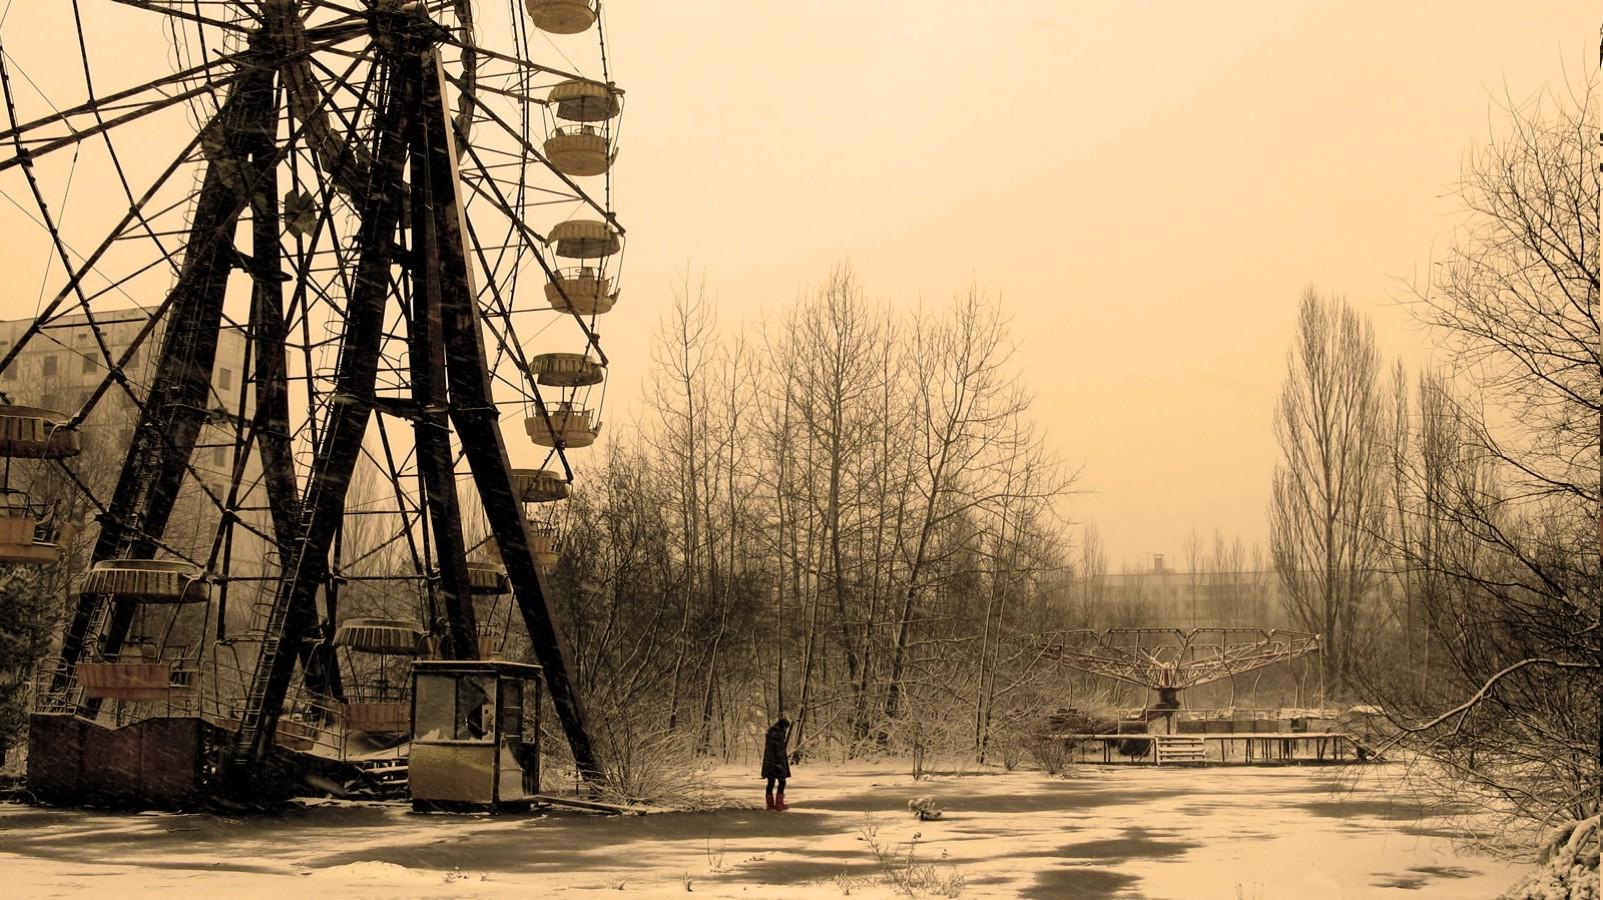 Wallpaper, 1603x900 px, abandoned, anime, Chernobyl, ferris wheel